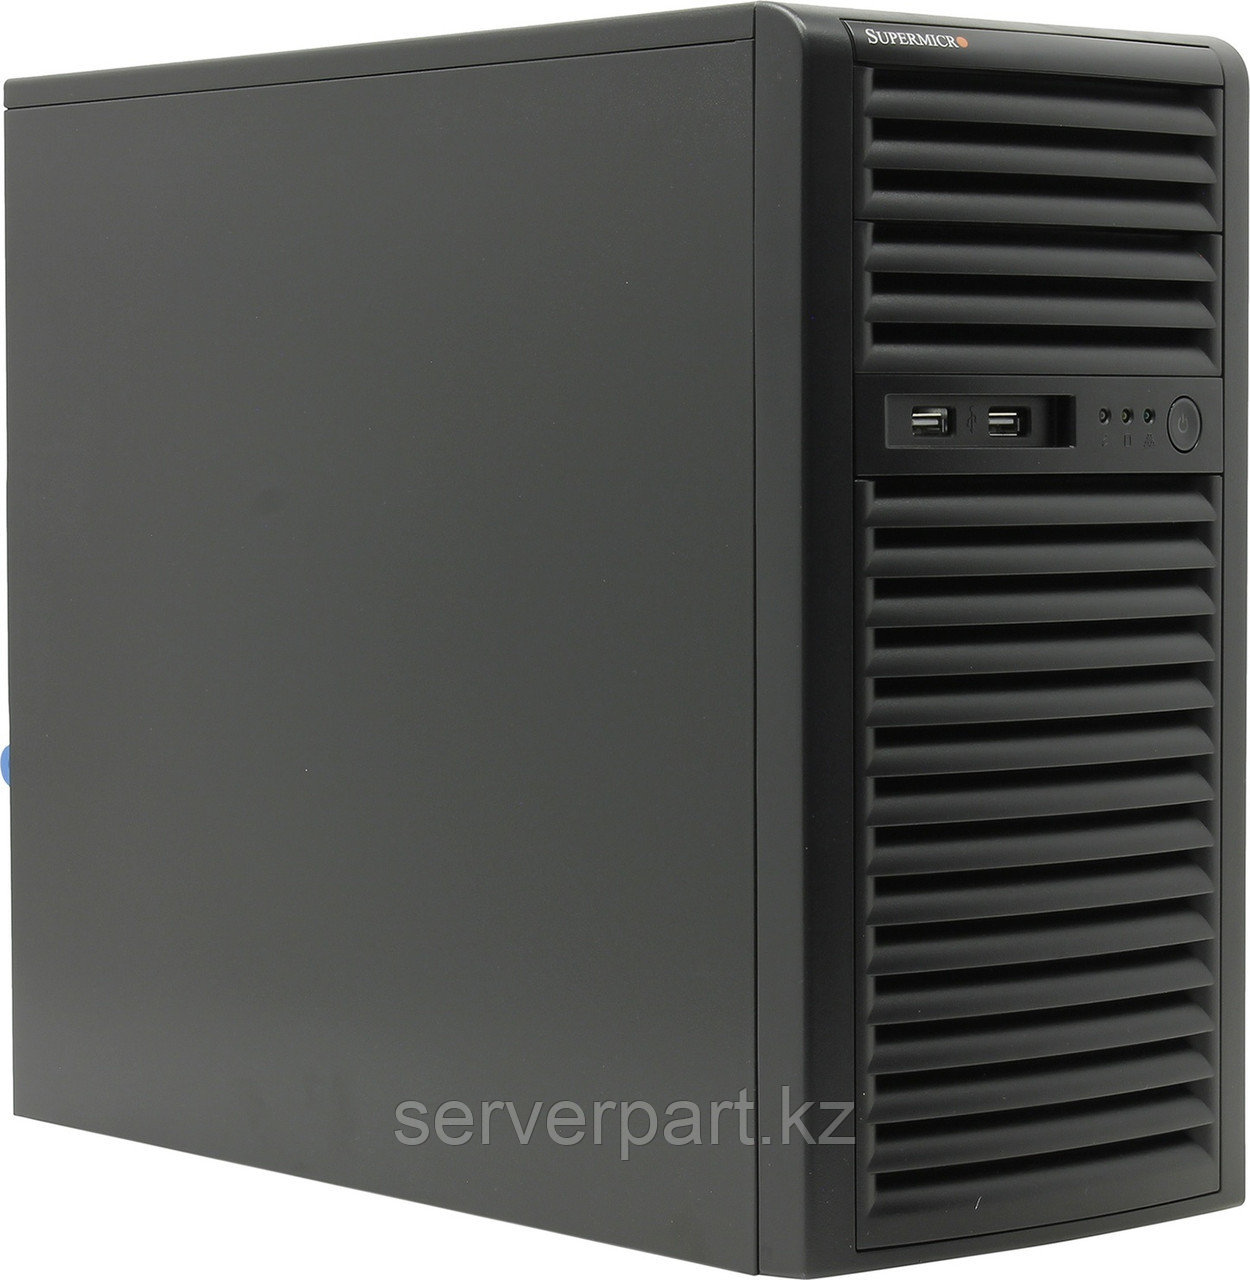 Сервер Supermicro SYS-5039C (Tower 4LFF)/4-core intel xeon E2224 (3.4GHz)/16GB UDIMM nECC, фото 1